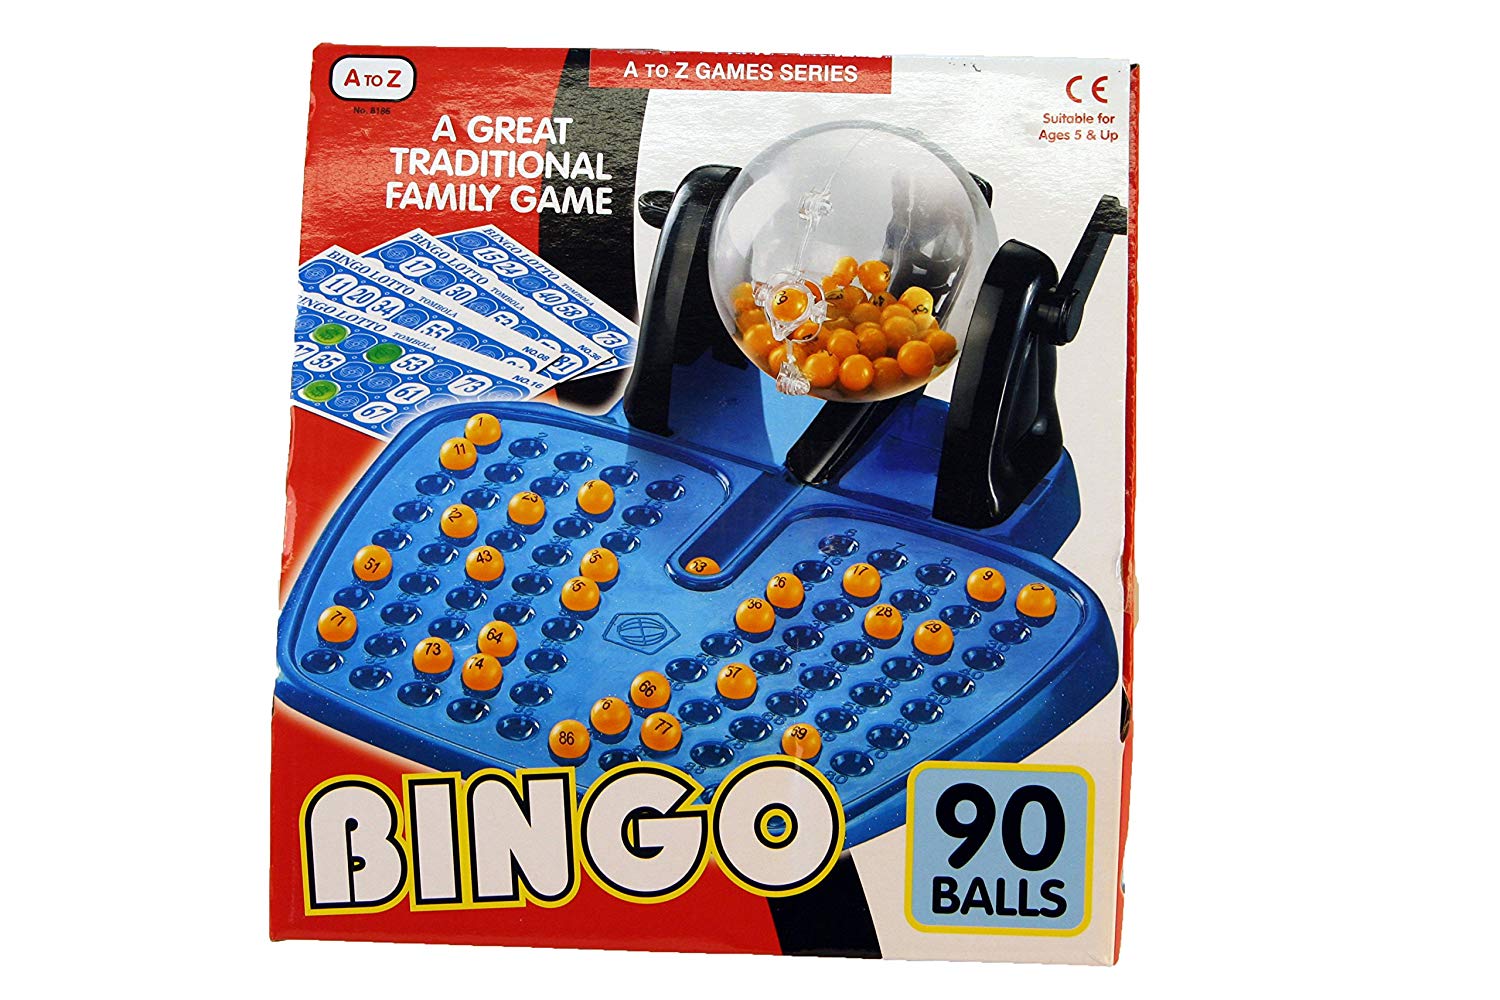 bingo party paga mesmo